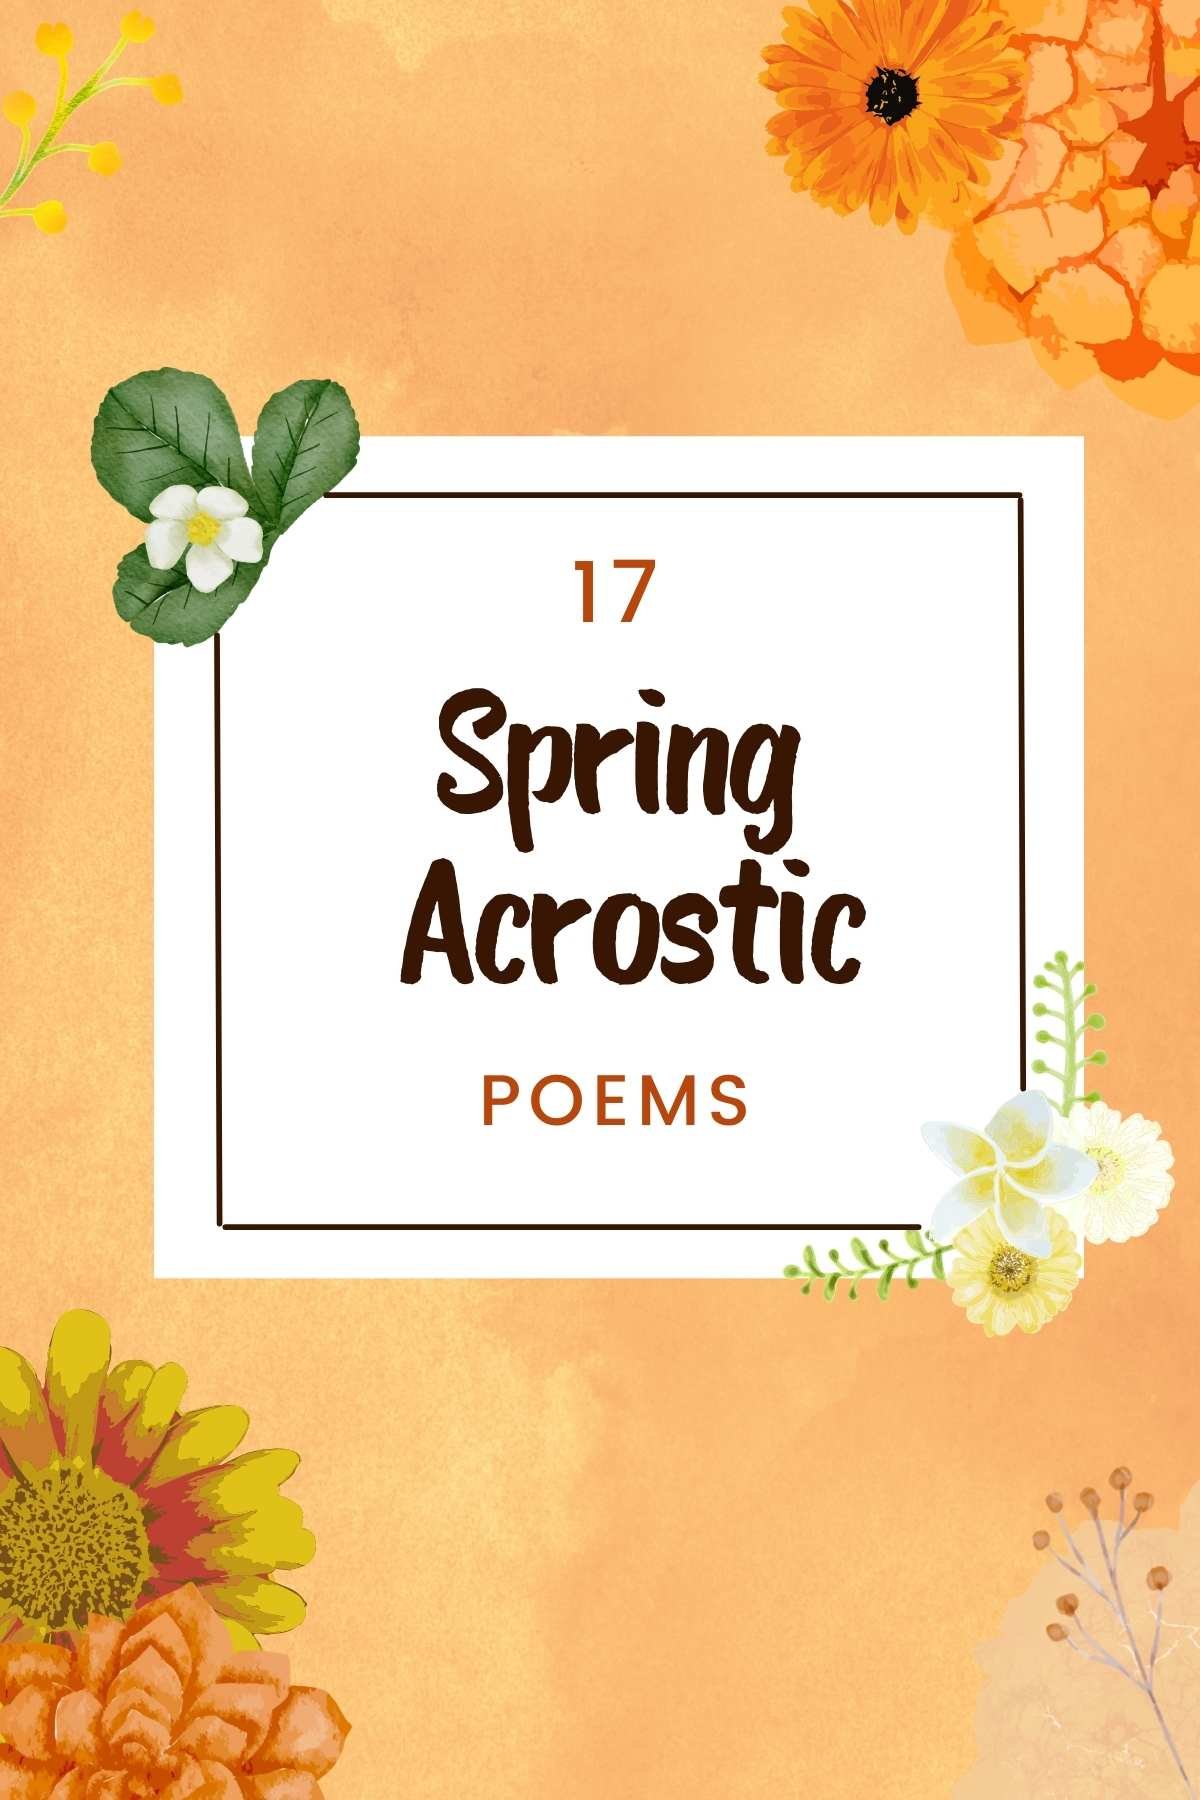 Spring acrostic poems